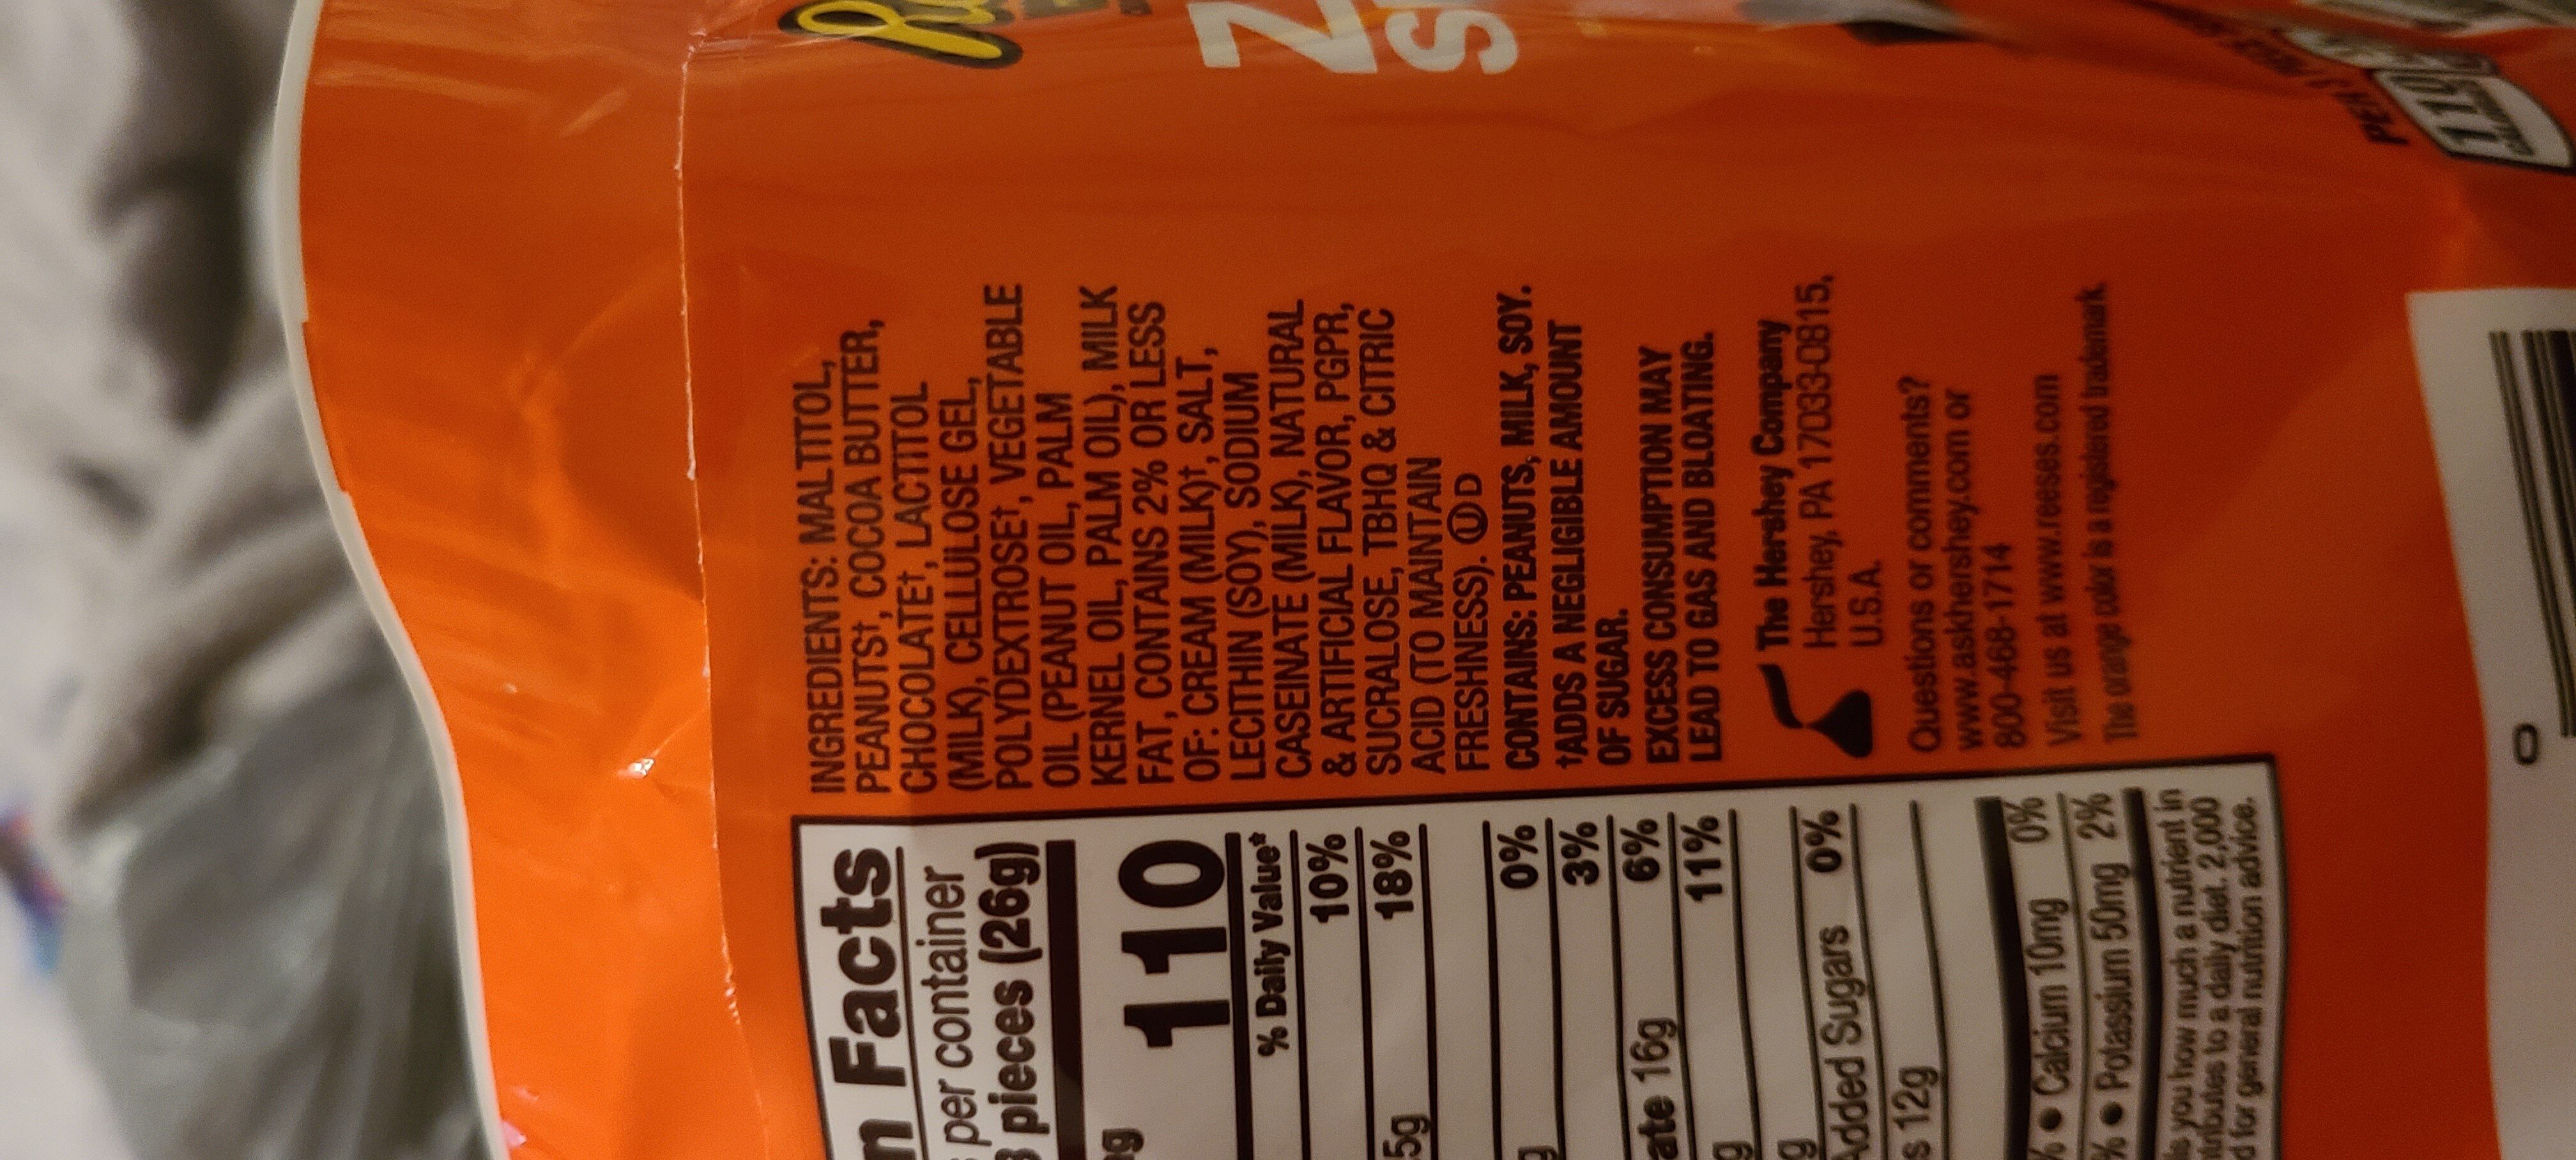 Reese’s Zero Sugar - Ingredients